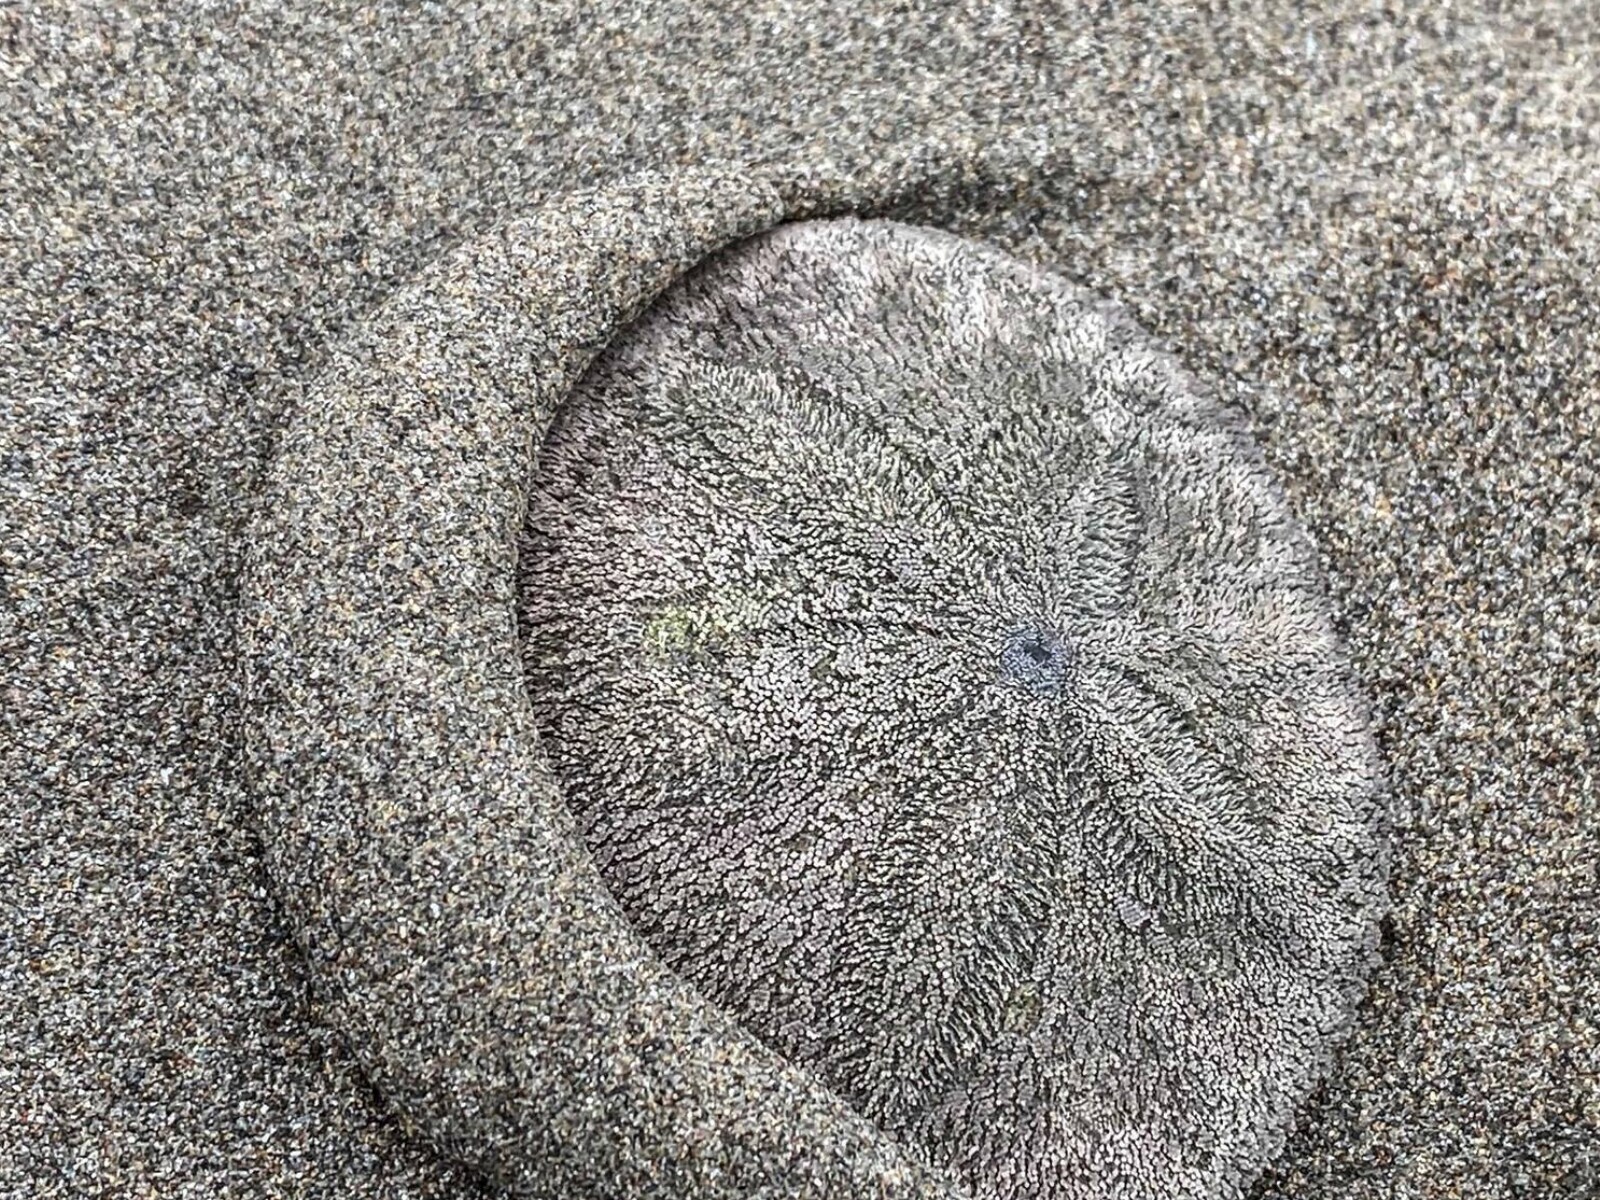 Thousands of live sand dollars wash up on Oregon coast at Seaside 